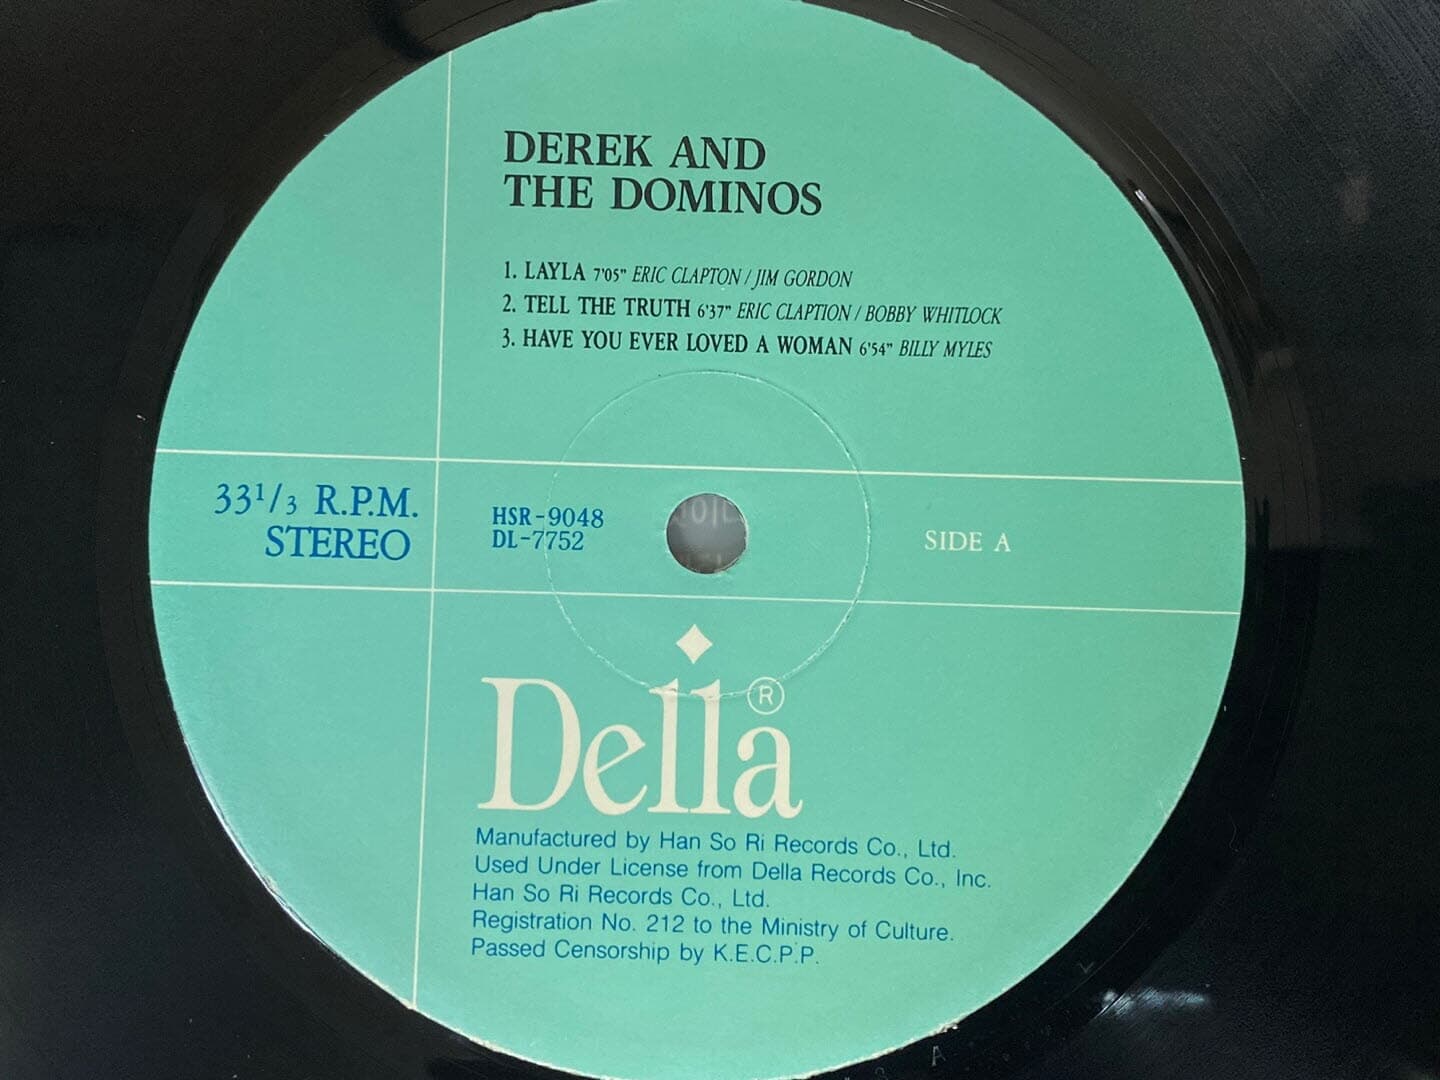 [LP] 데릭 앤 도미노스 - Derek And The Dominos - Derek & The Dominos (Live) I Looked Away 2Lps [한소리-라이센스반]